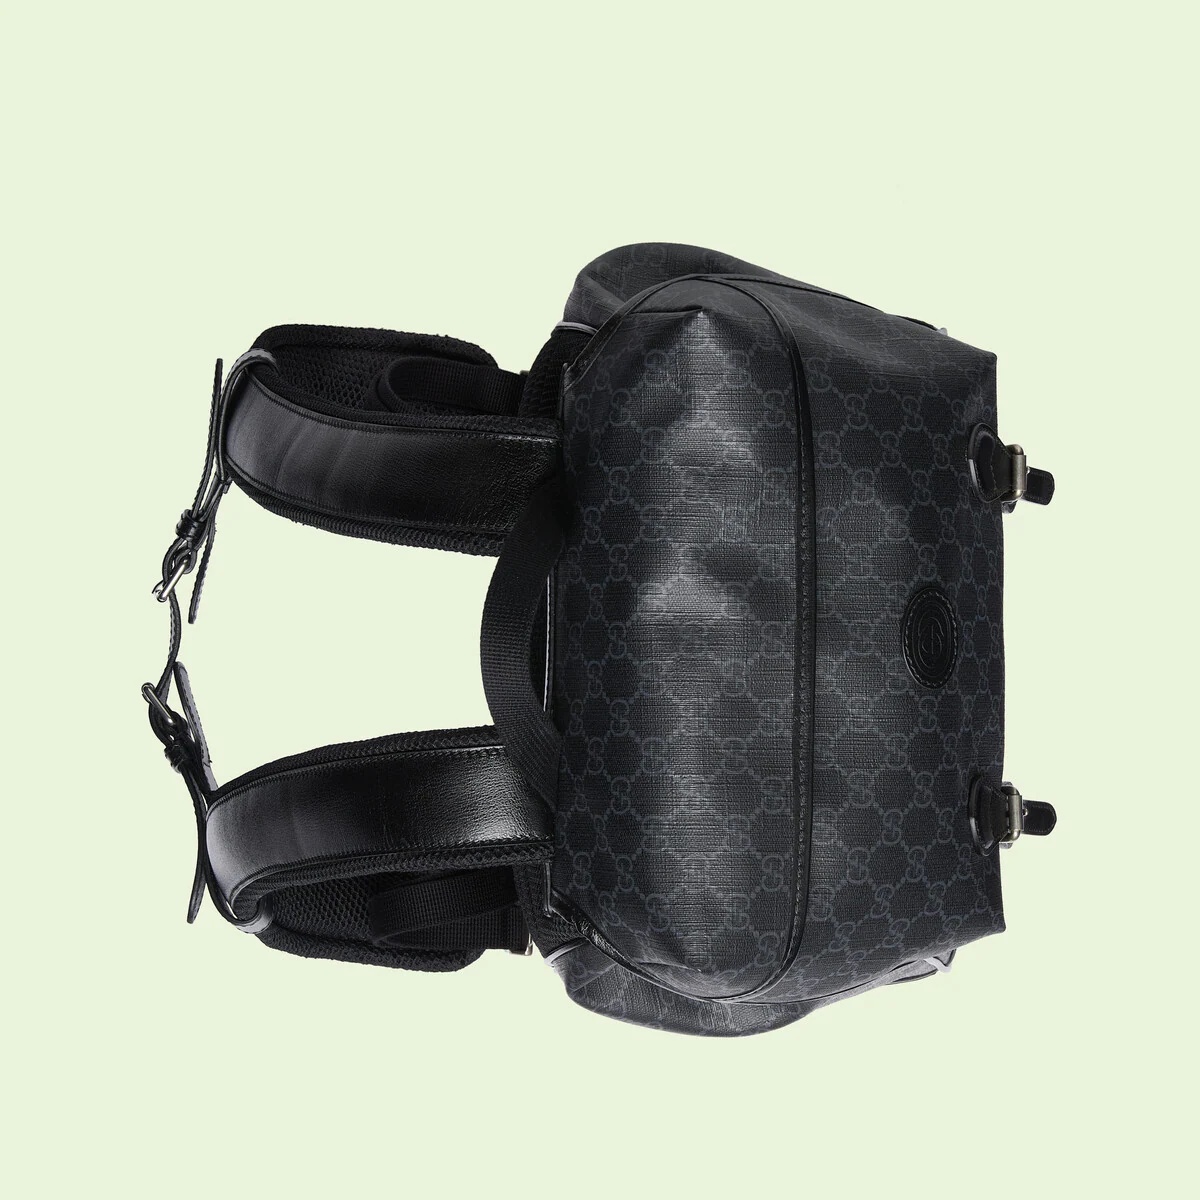 Medium backpack with Interlocking G - 6